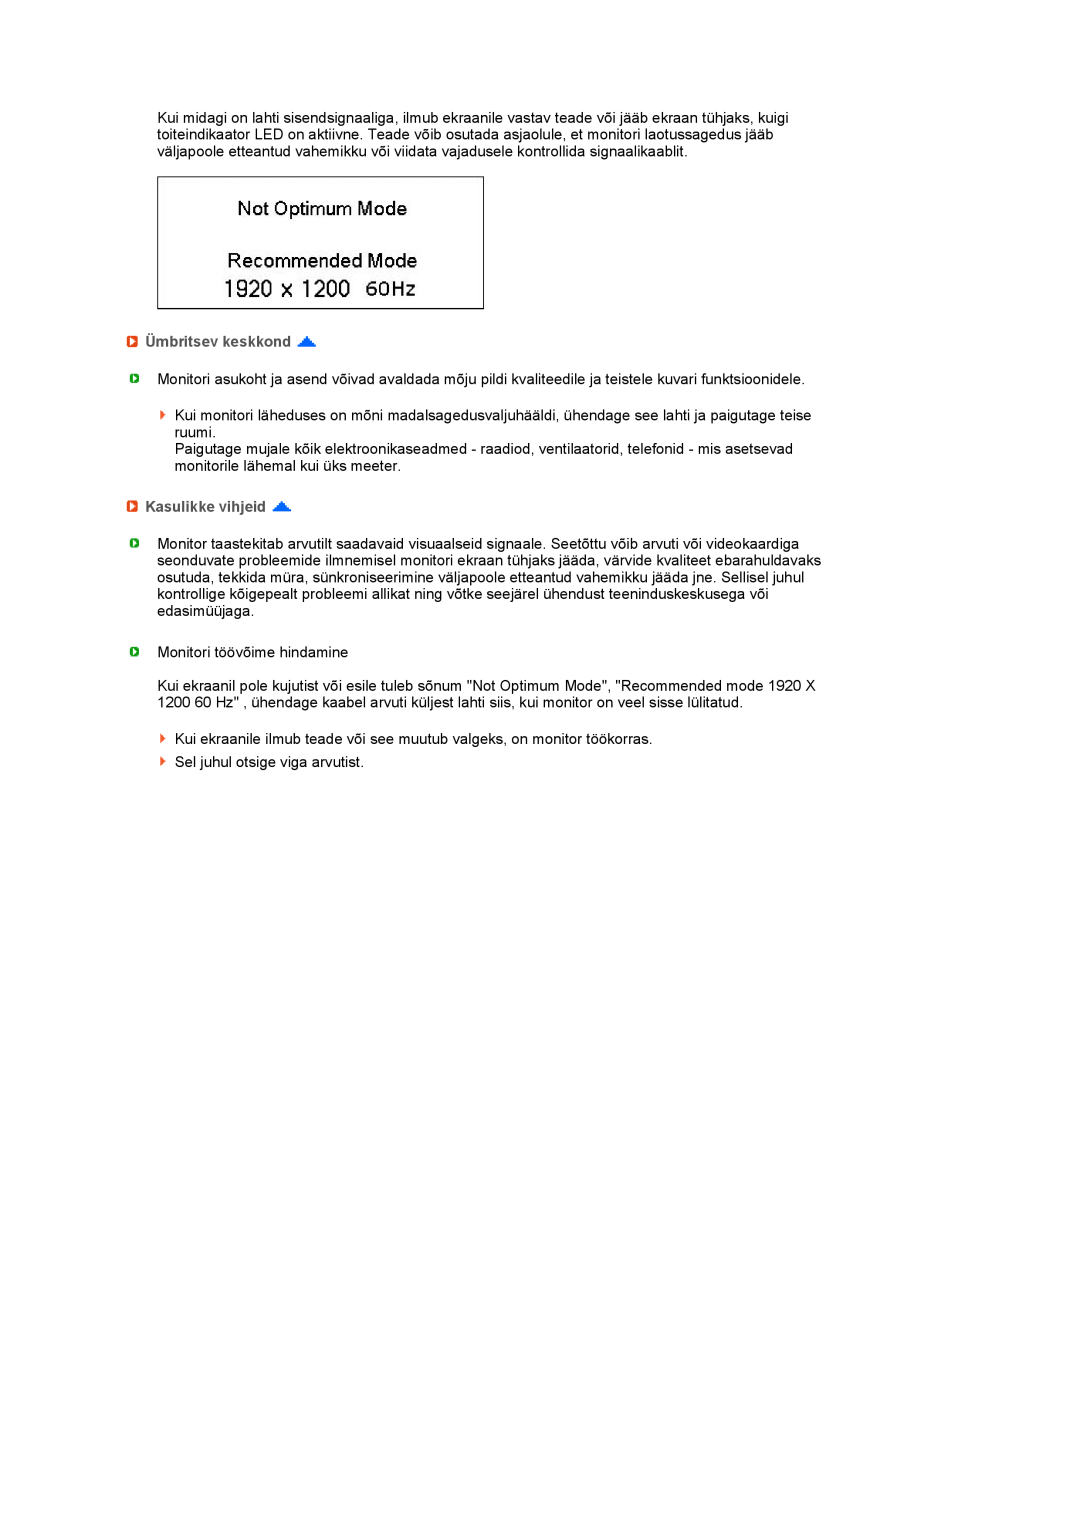 Samsung LS27HUBCB/EDC manual Ümbritsev keskkond, Kasulikke vihjeid 